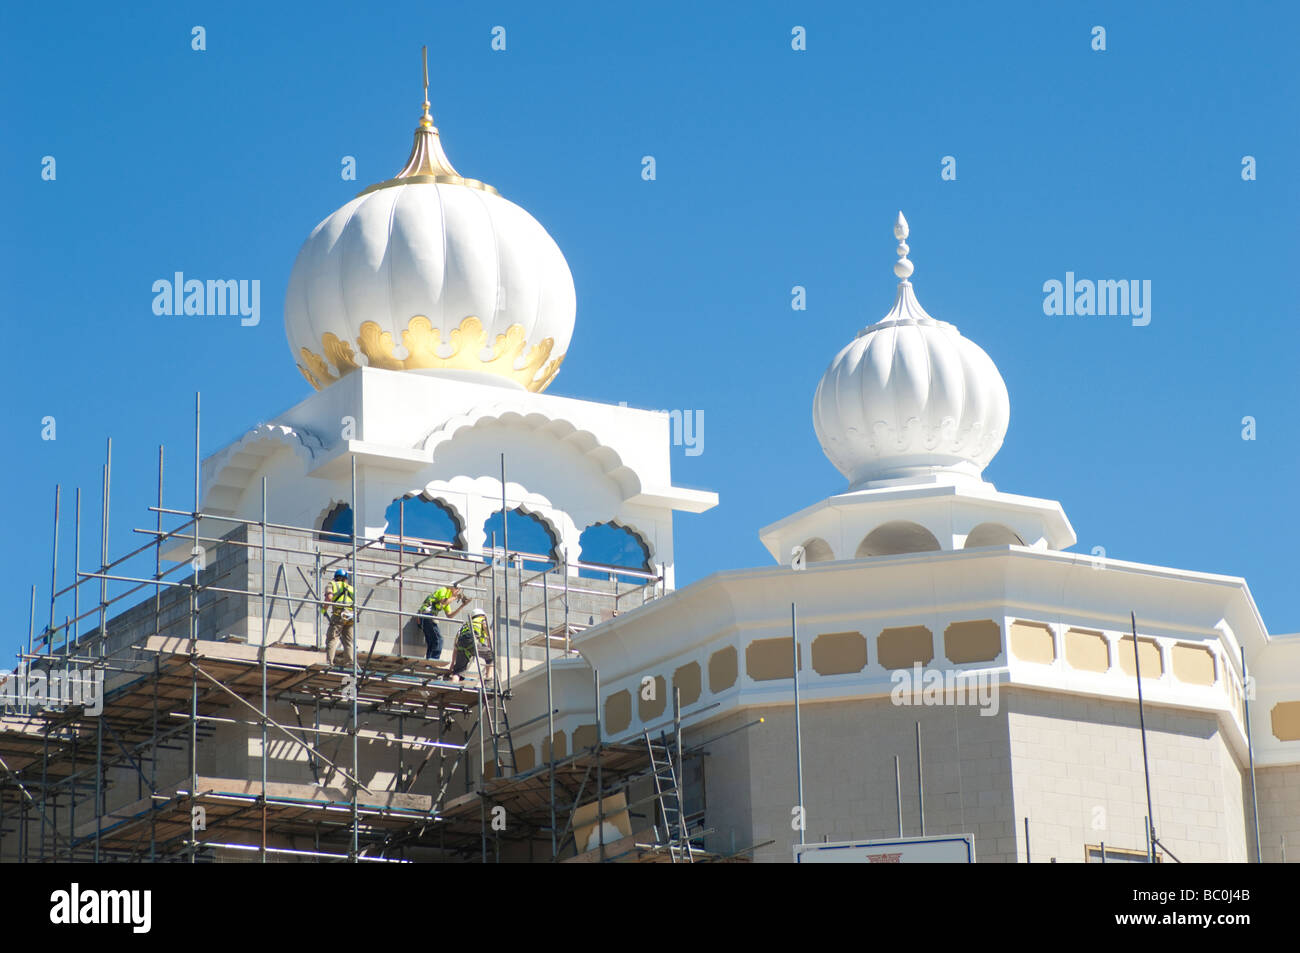 Gurdwara Sikh Temple under construction, Leamington Spa, Warwickshire, UK. Stock Photo